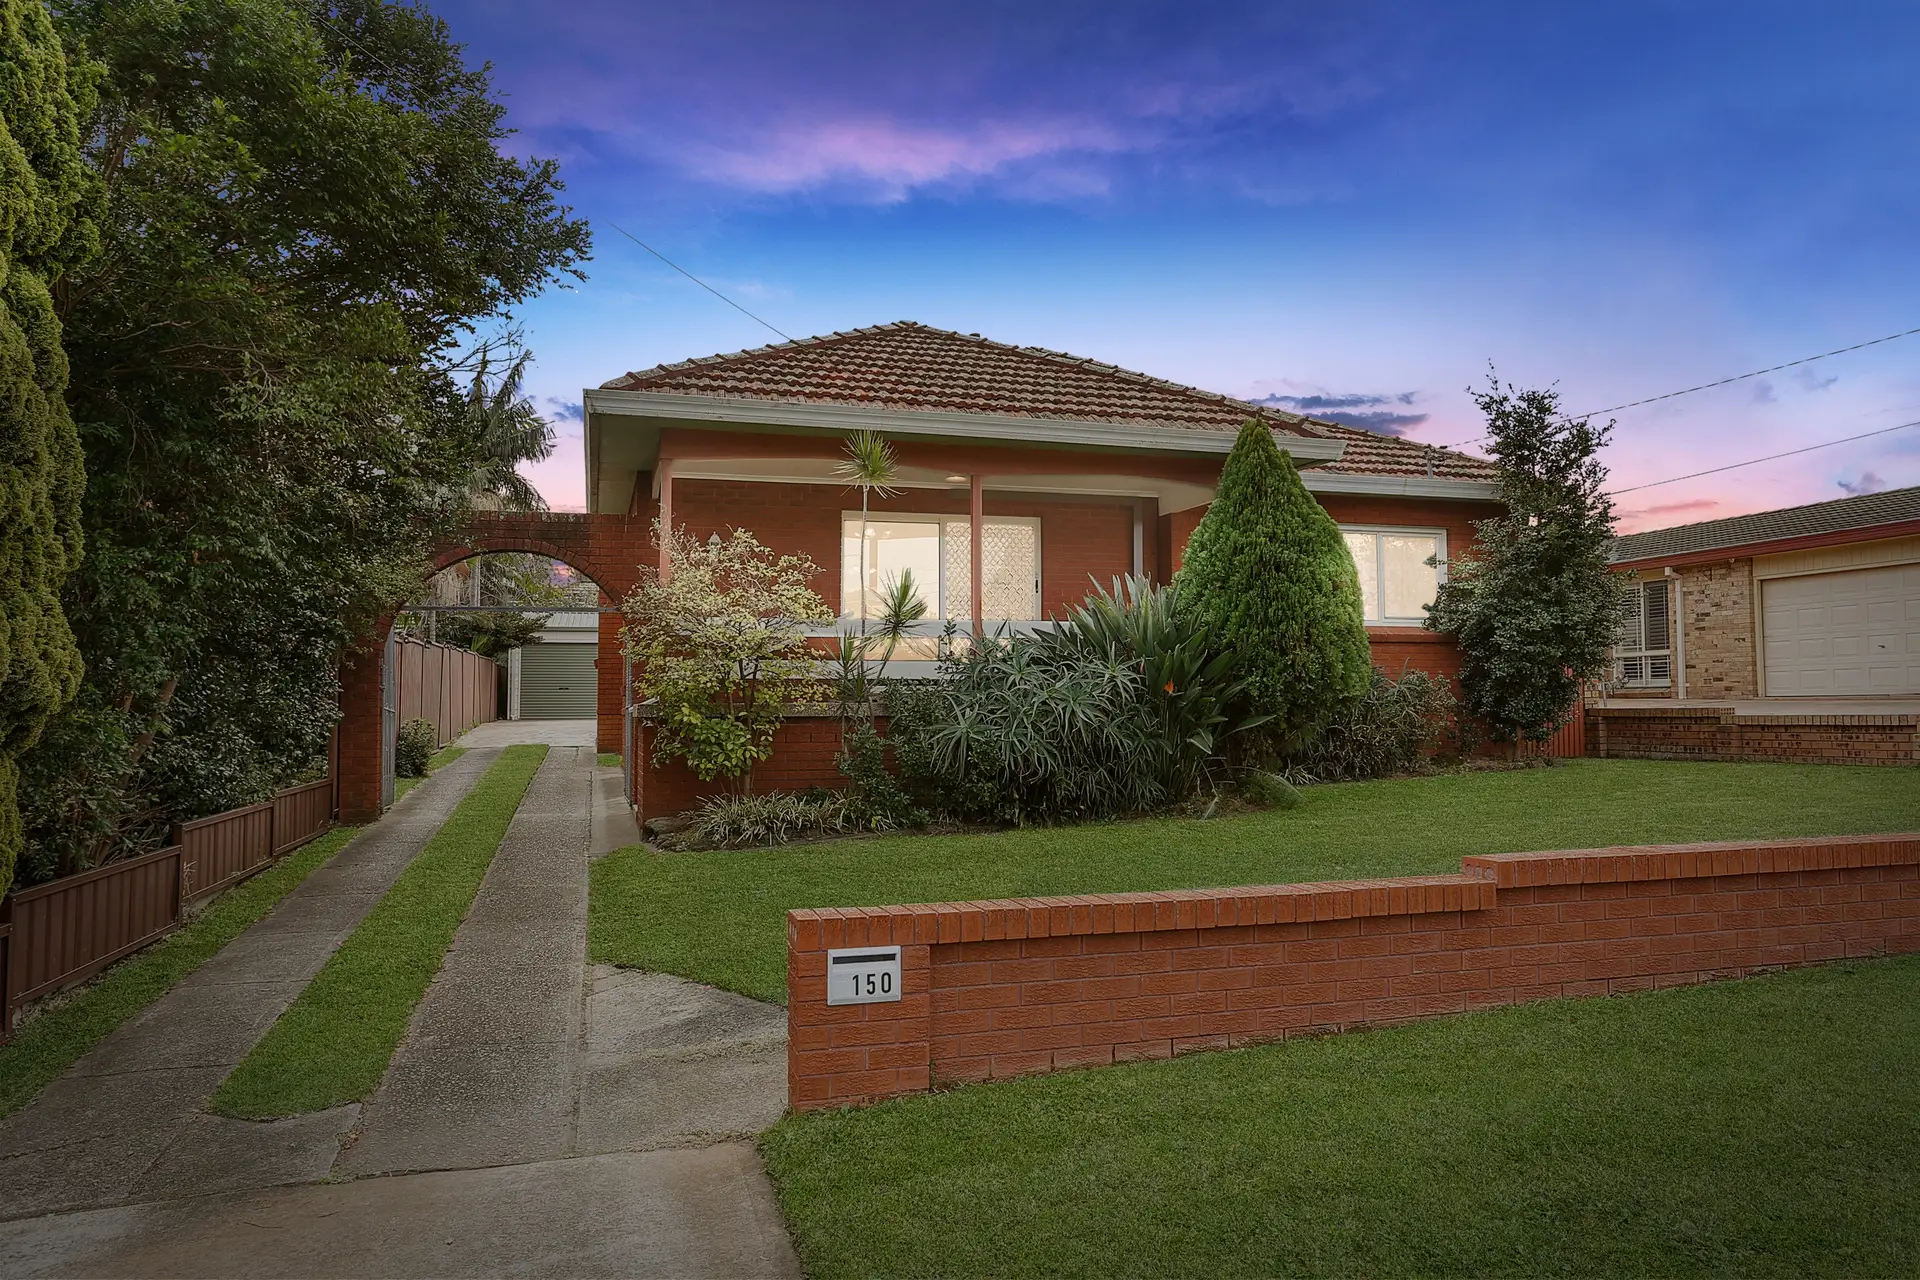 150 Flinders Road, Georges Hall Sold by Richard Matthews Real Estate - image 1